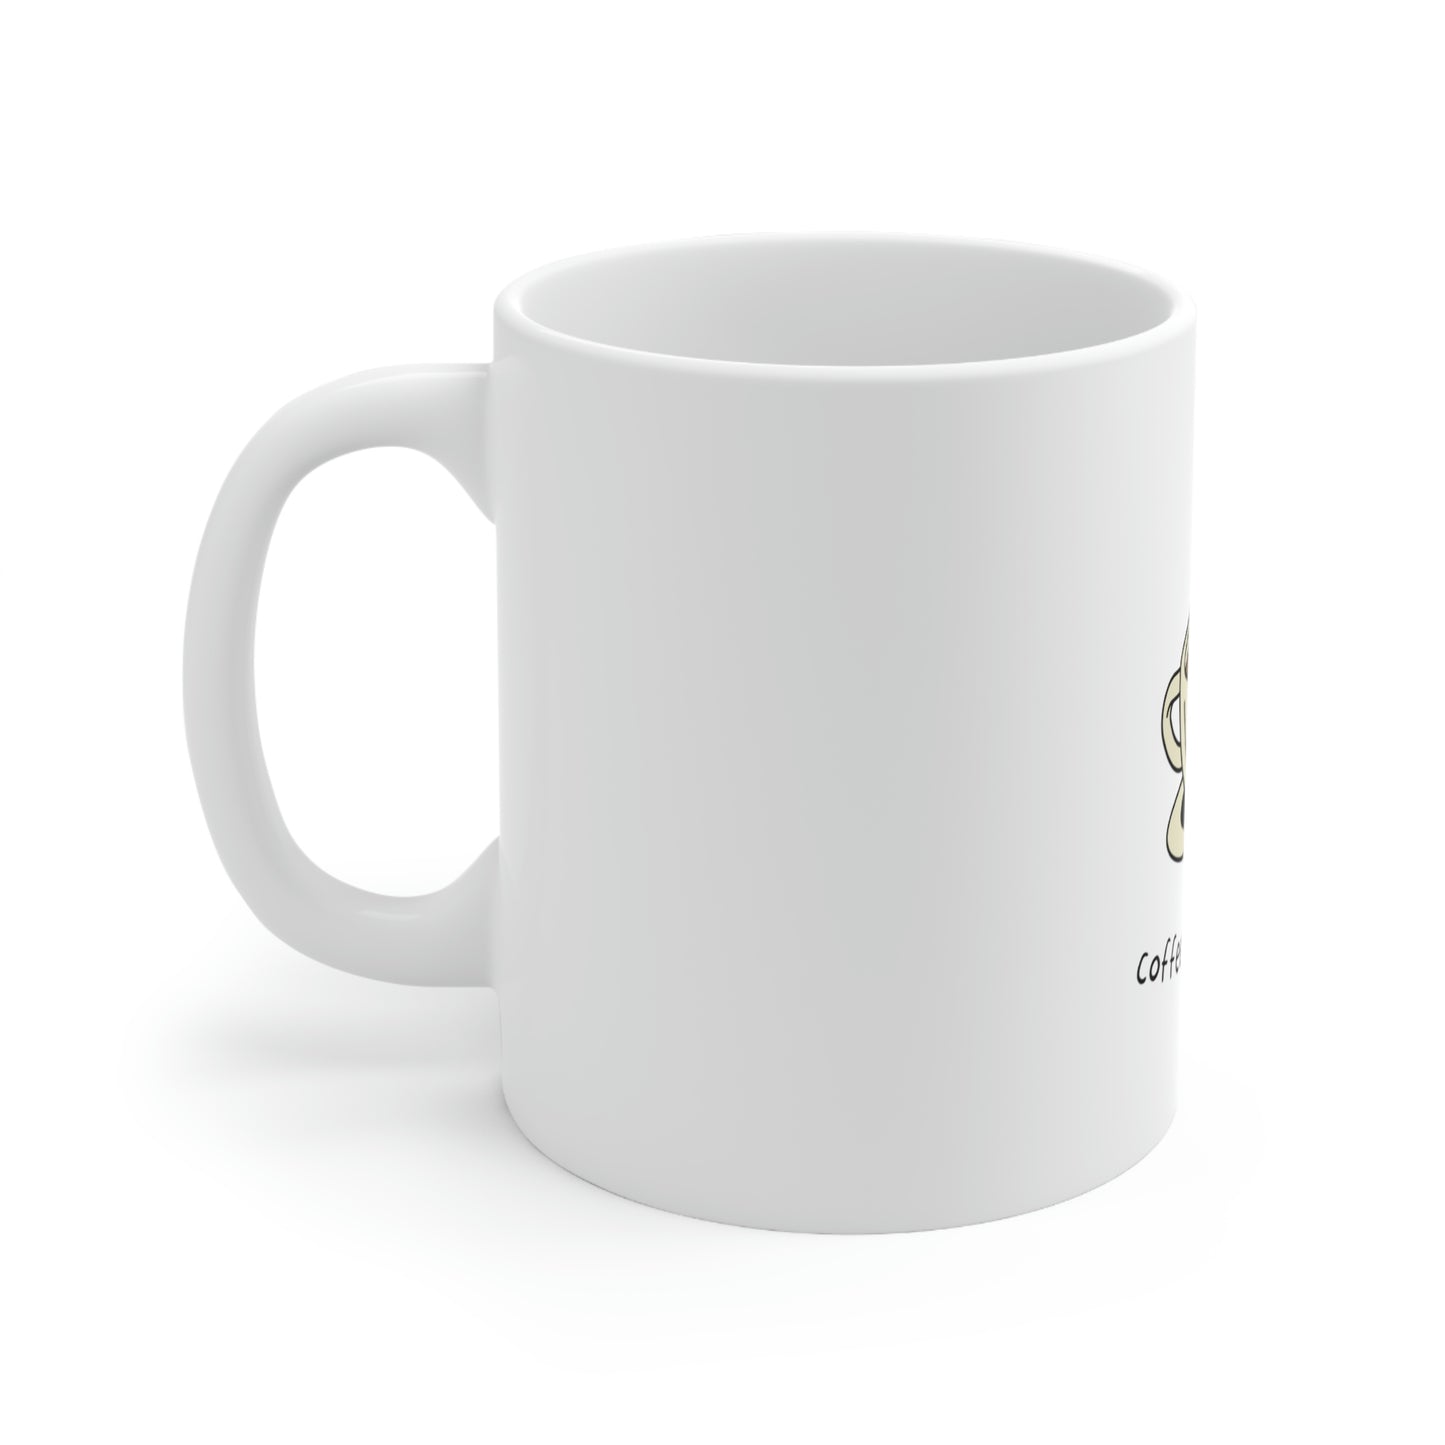 Coffee needs you break Ceramic Coffee Cups, 11oz, 15oz gift funny humor hot drink need work drink mug cute tea small personalized